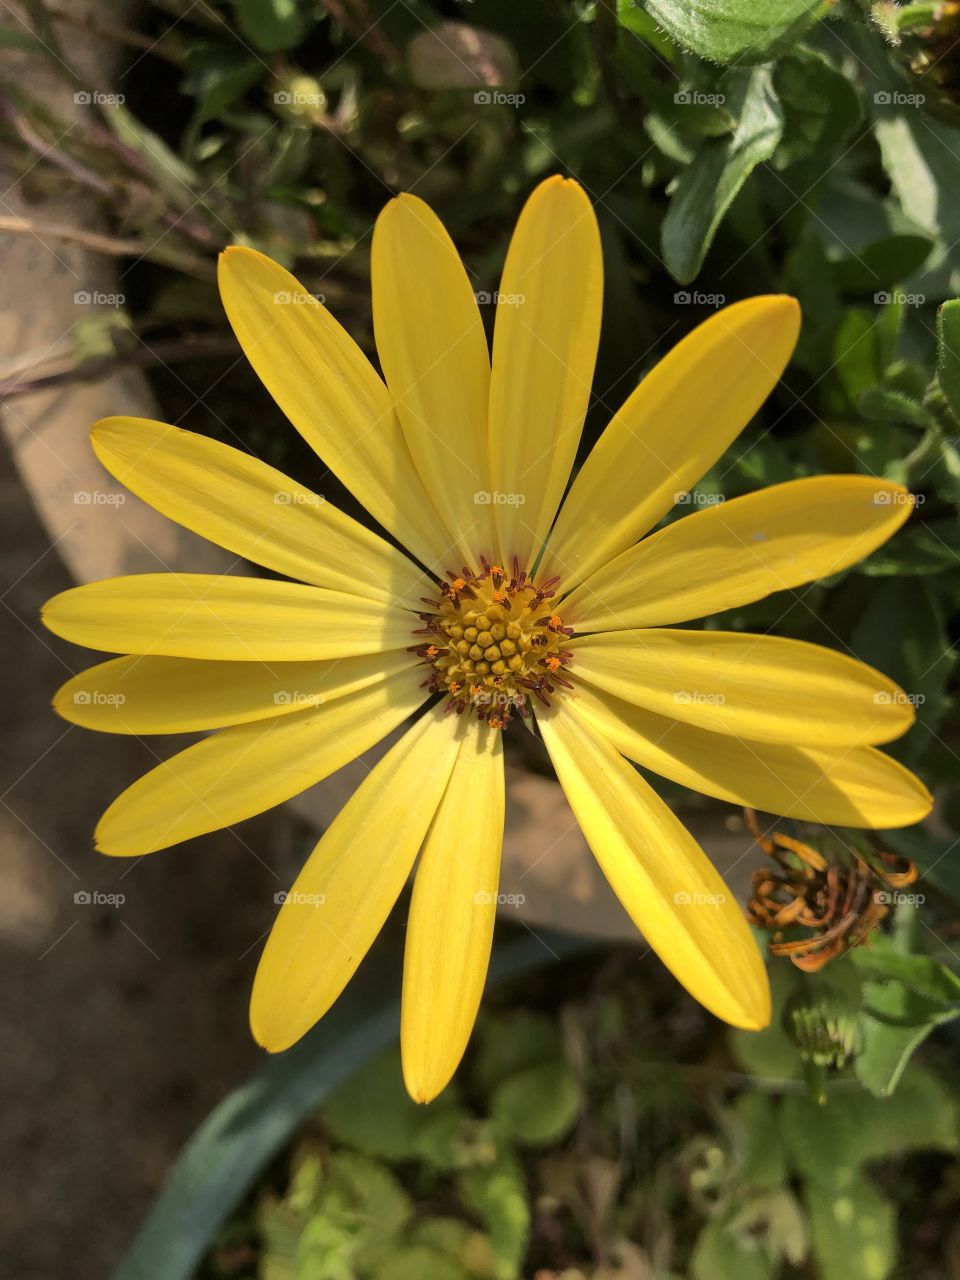 Another stunning yellow flower, not a sunflower, more a daisy type stunner.